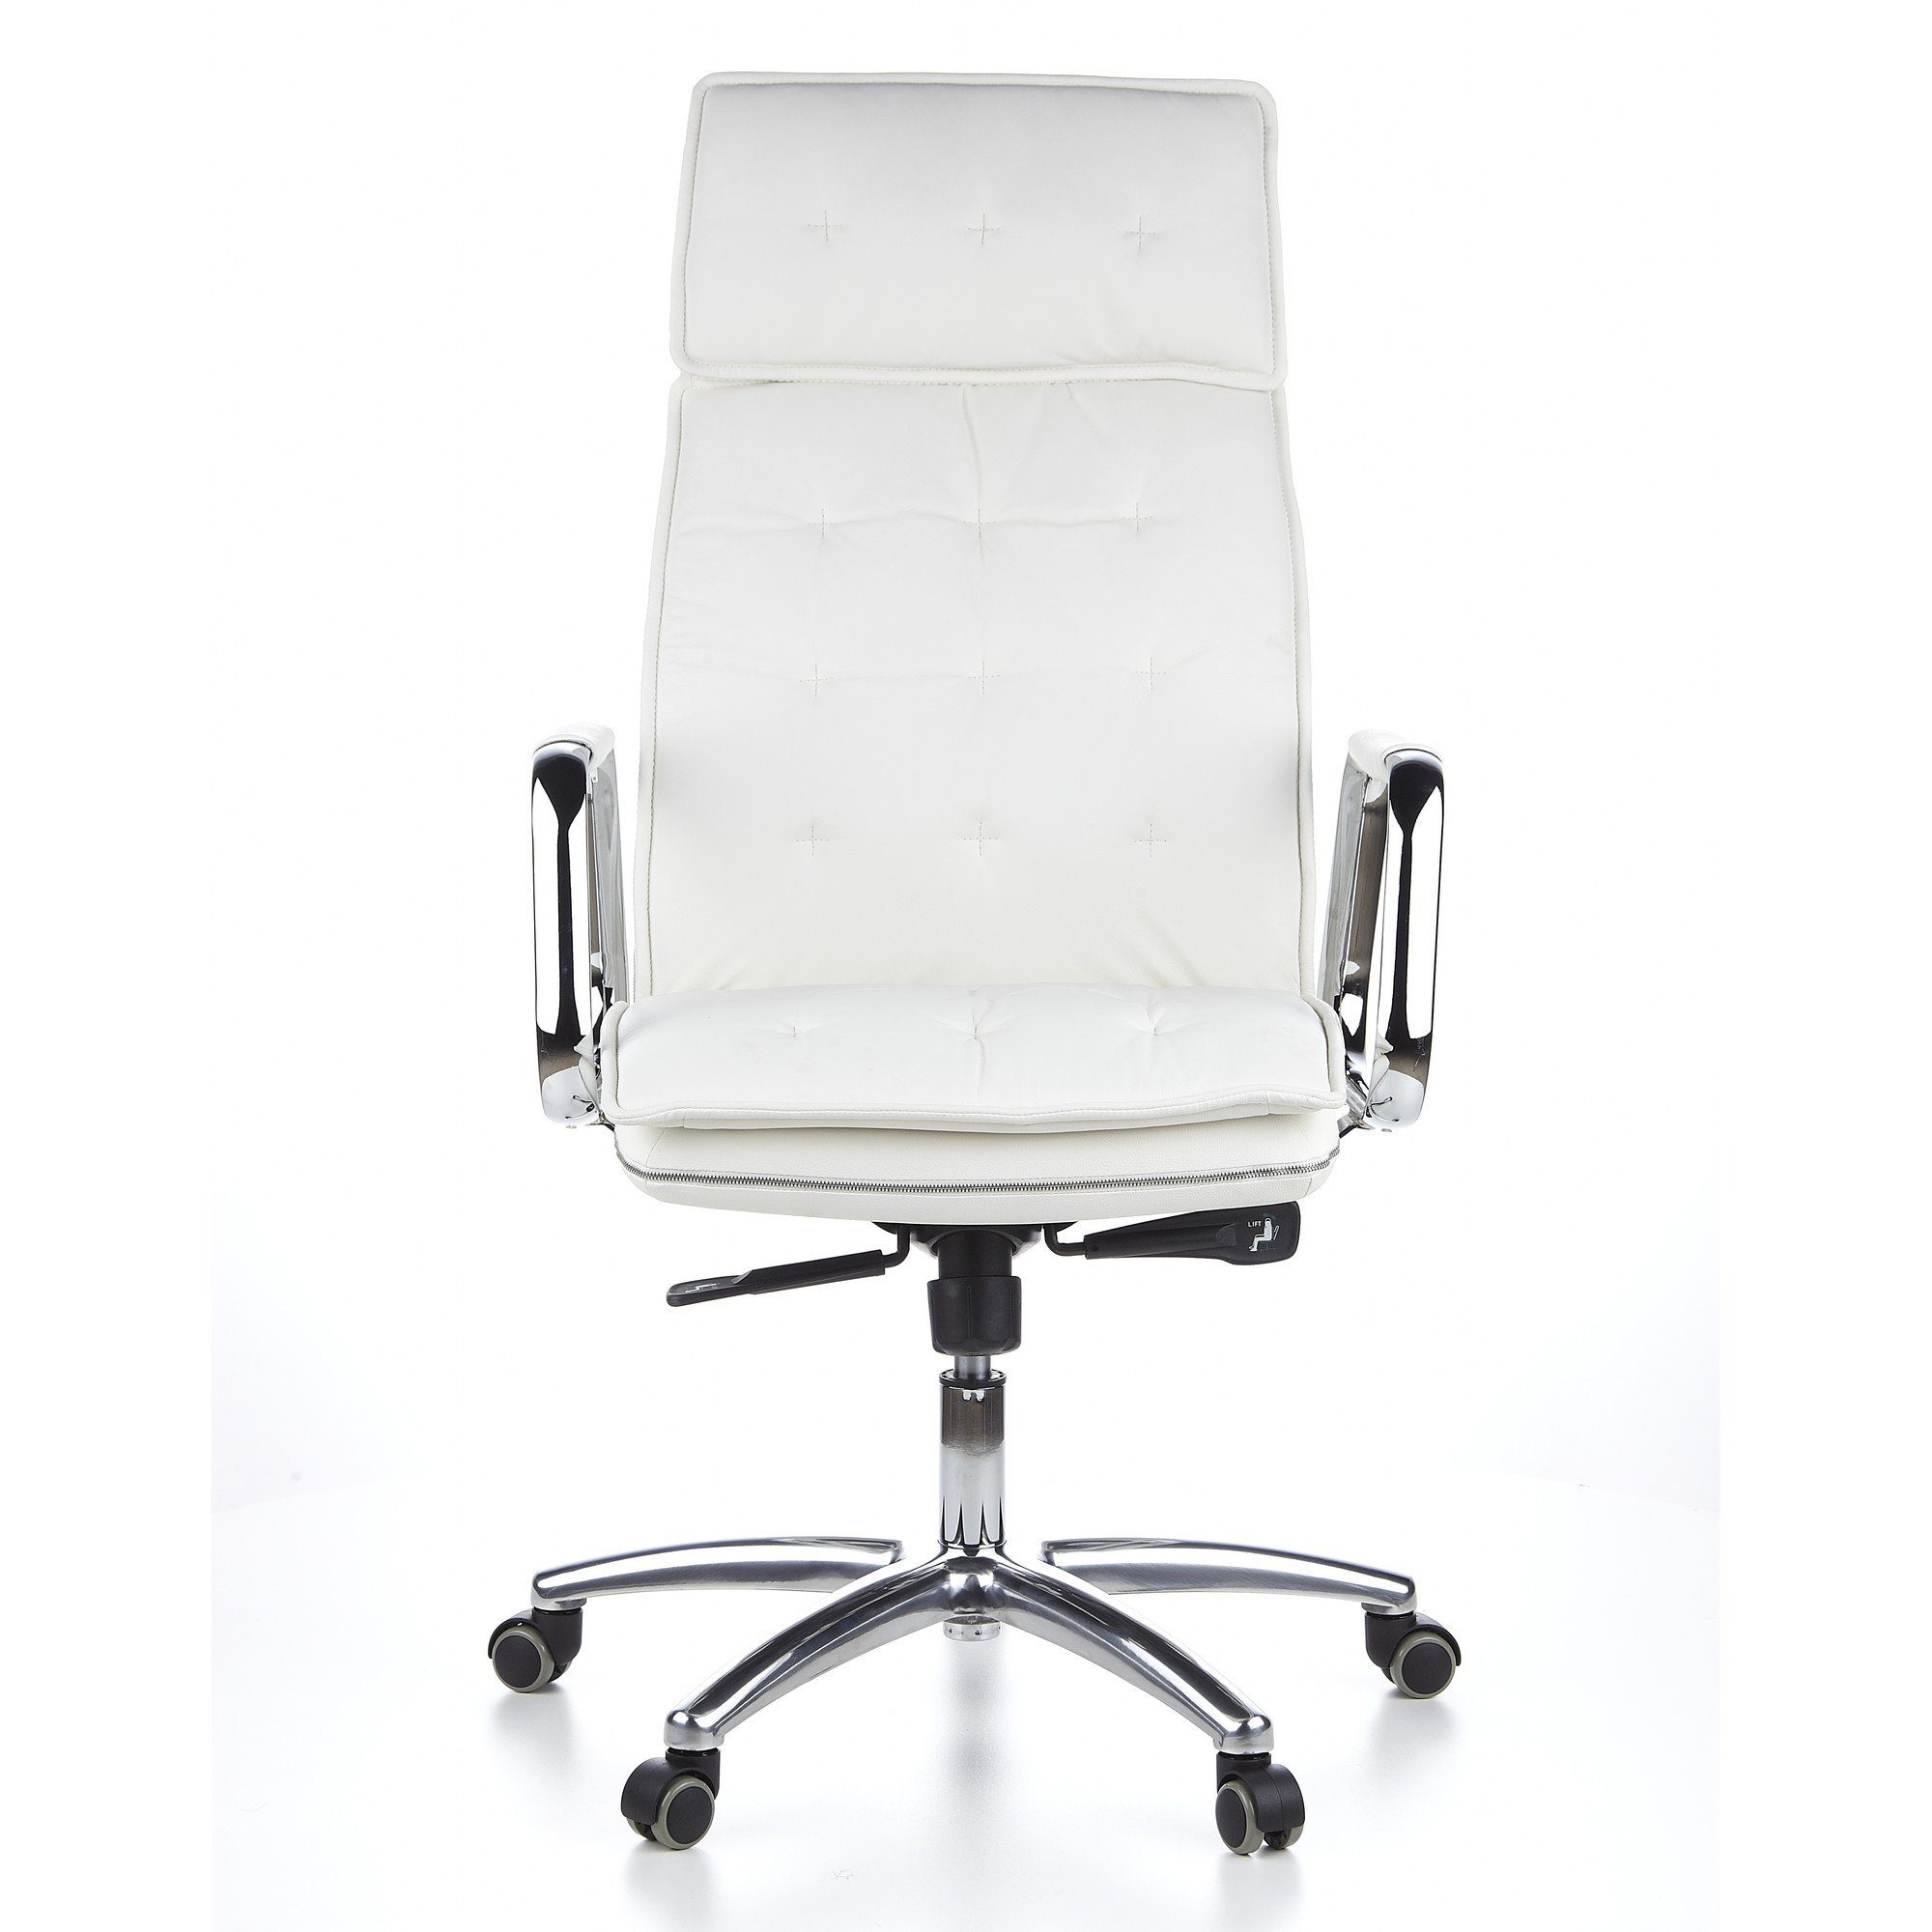 VILLA Chefsessel hjh 20 ergonomisch Drehstuhl Profi OFFICE mit Armlehnen, Bürostuhl Leder Chefsessel